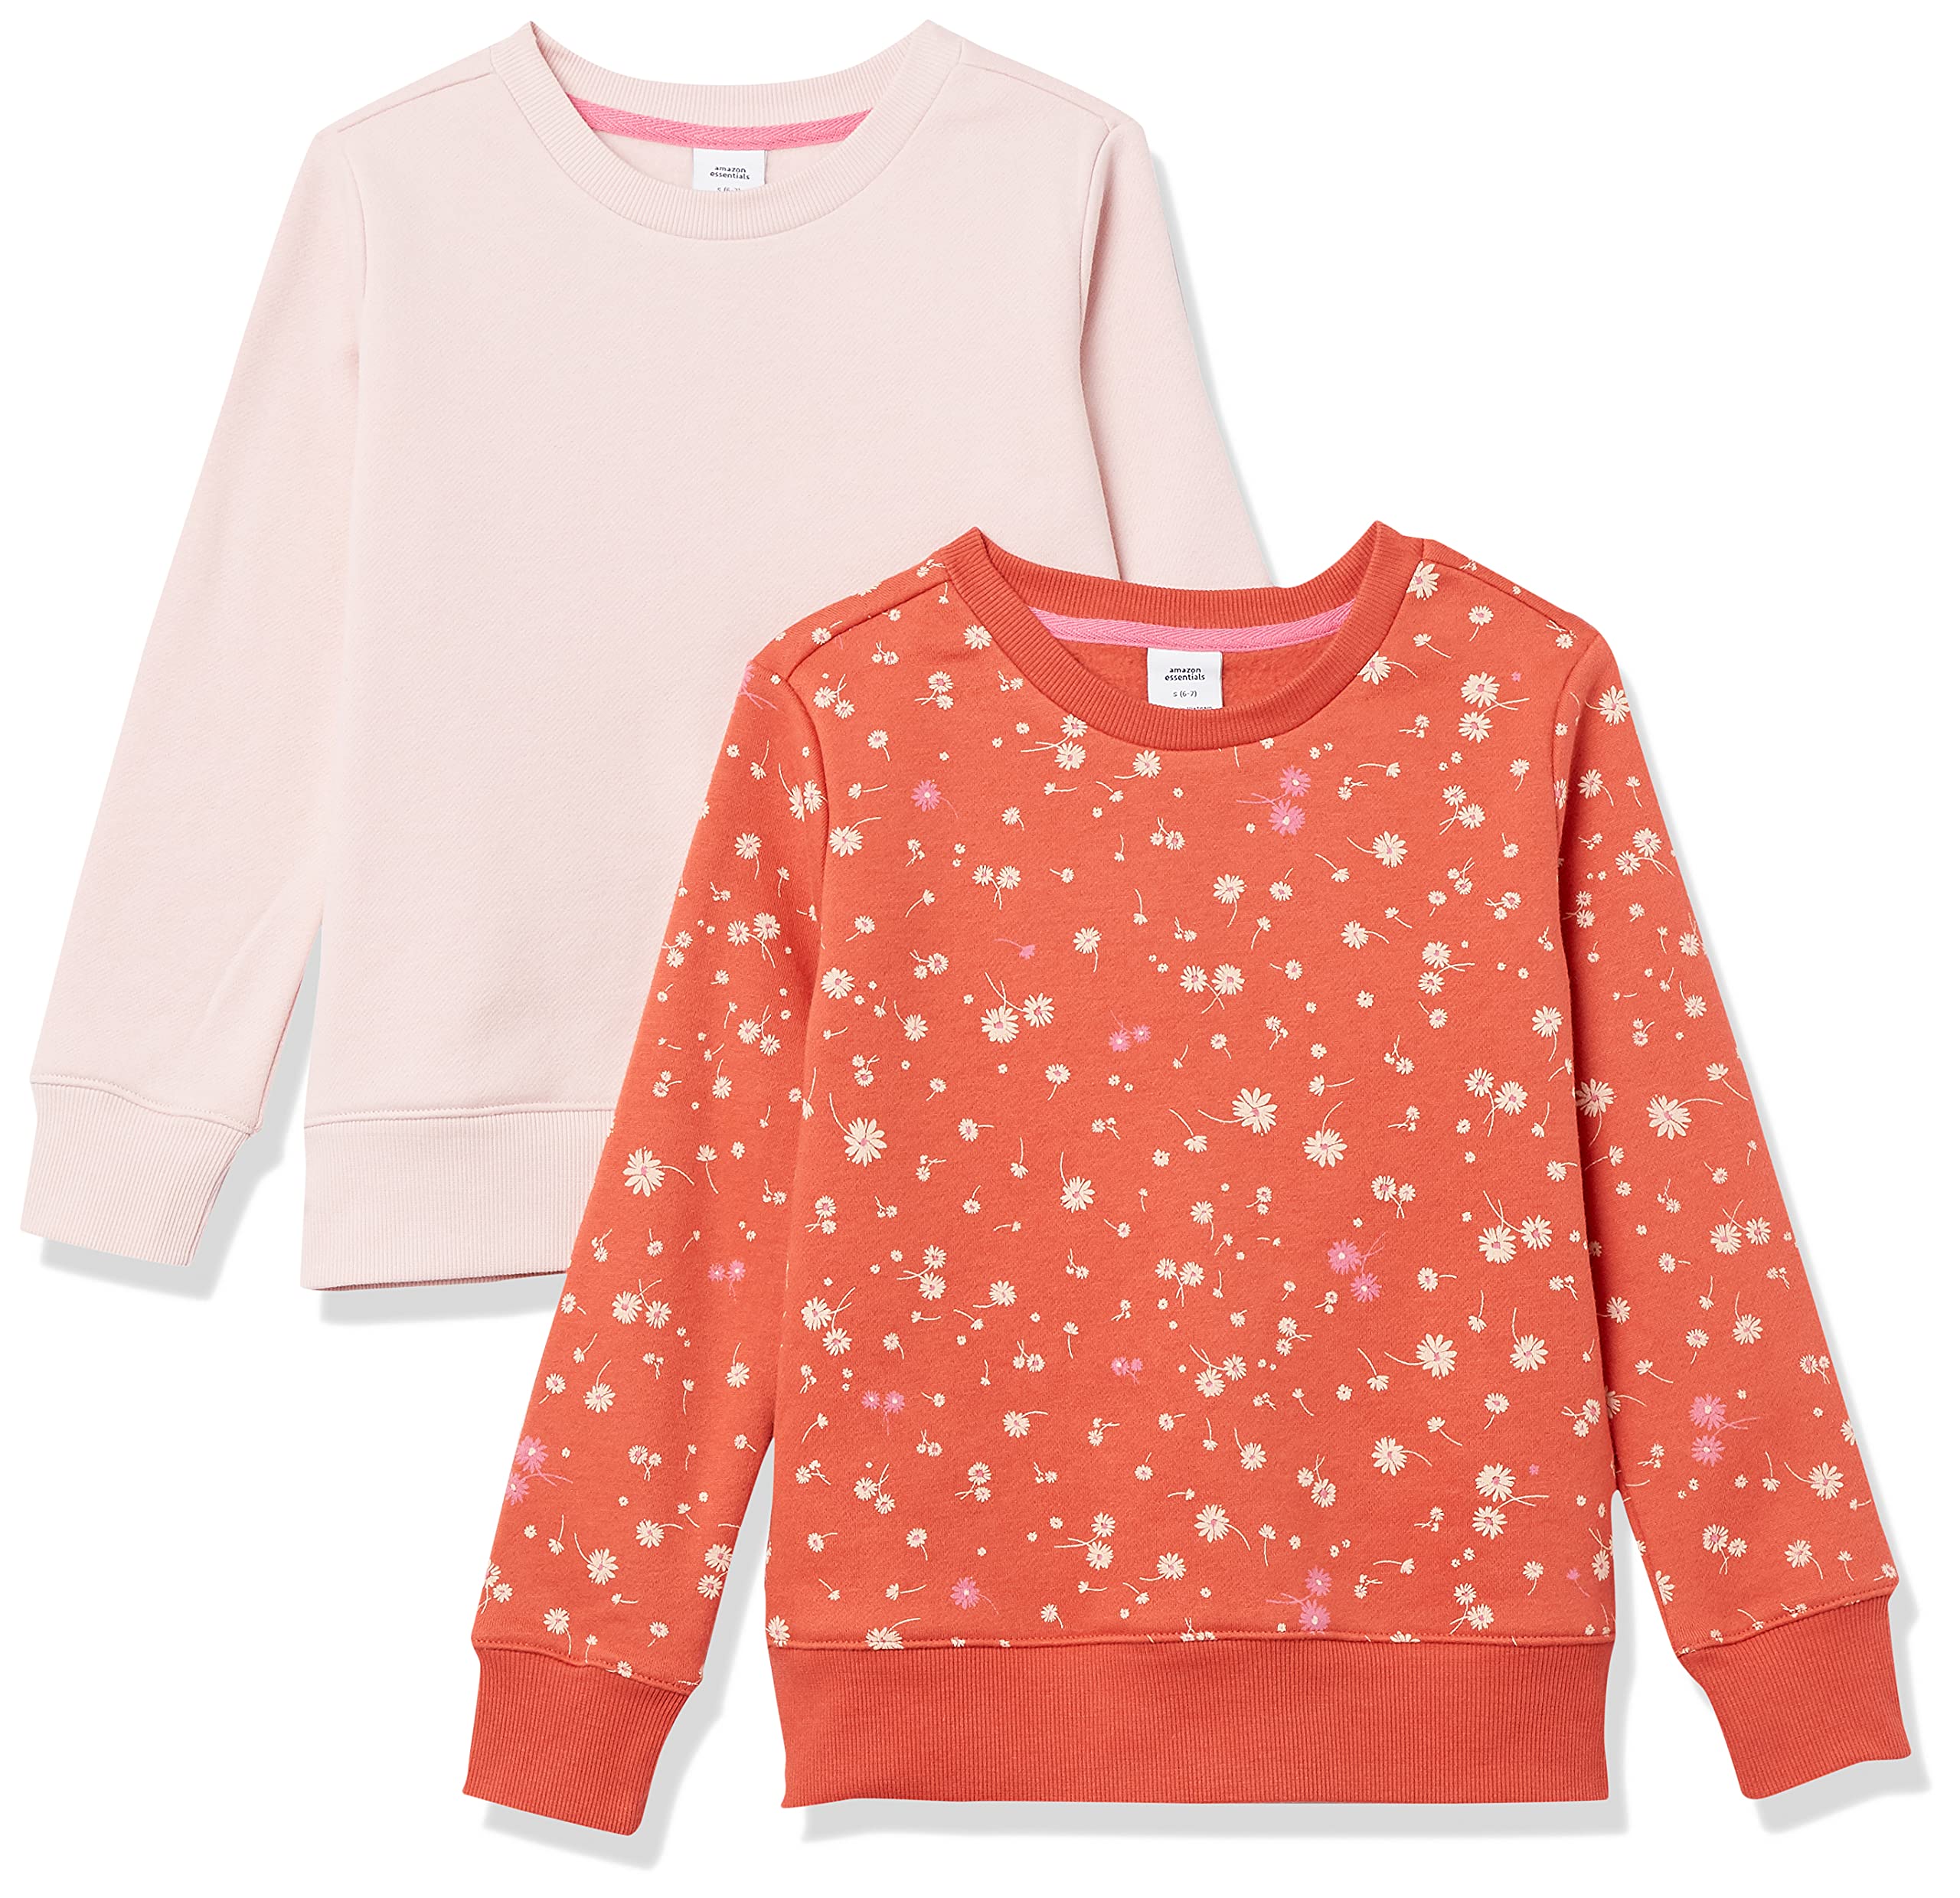 Amazon Essentials Girls and Toddlers' Fleece Crew-Neck Sweatshirts, Pack of 2